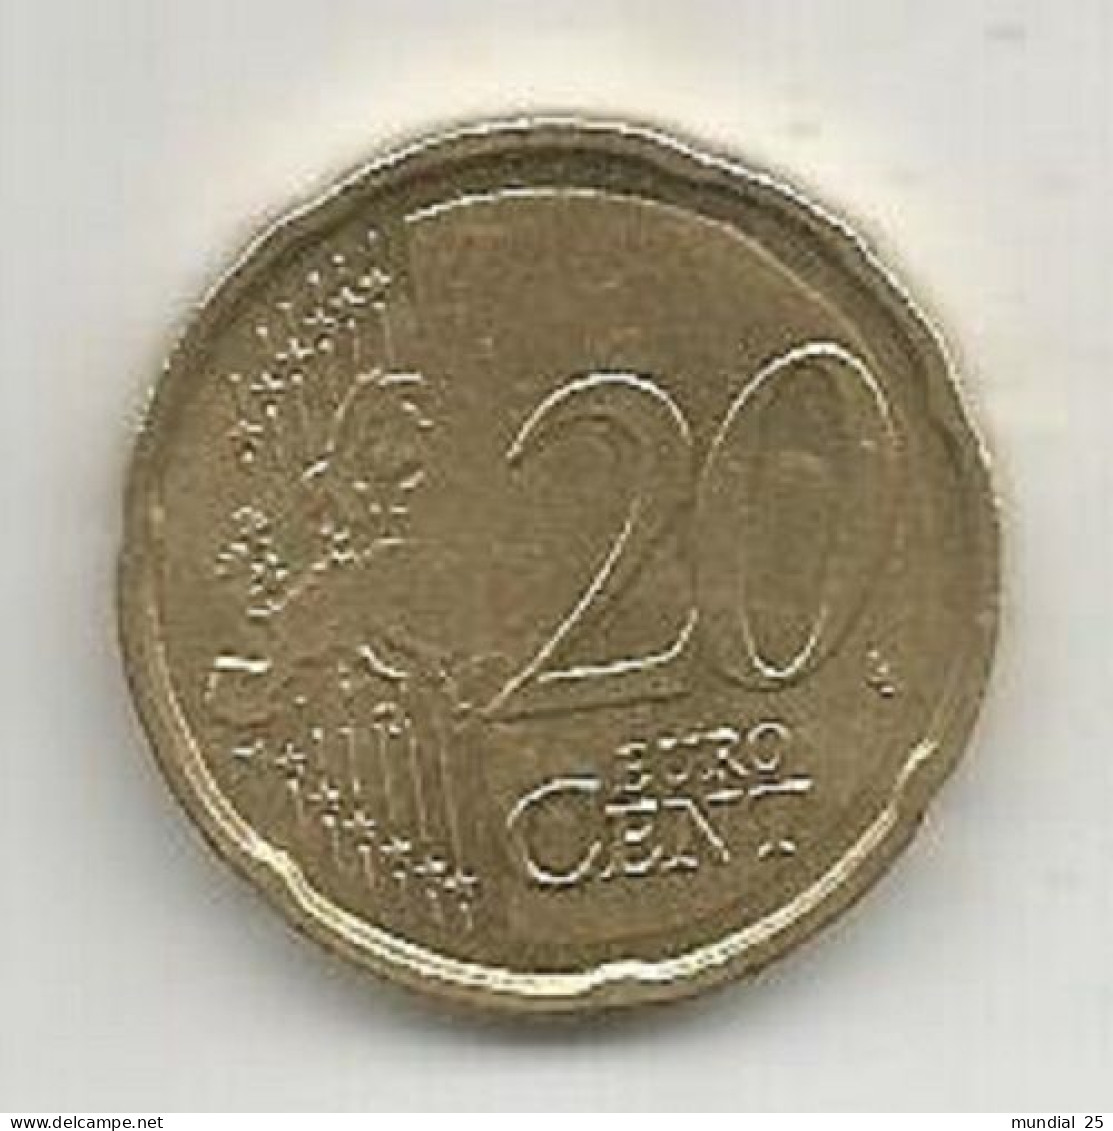 GERMANY 20 EURO CENT 2007 (G) - Germany